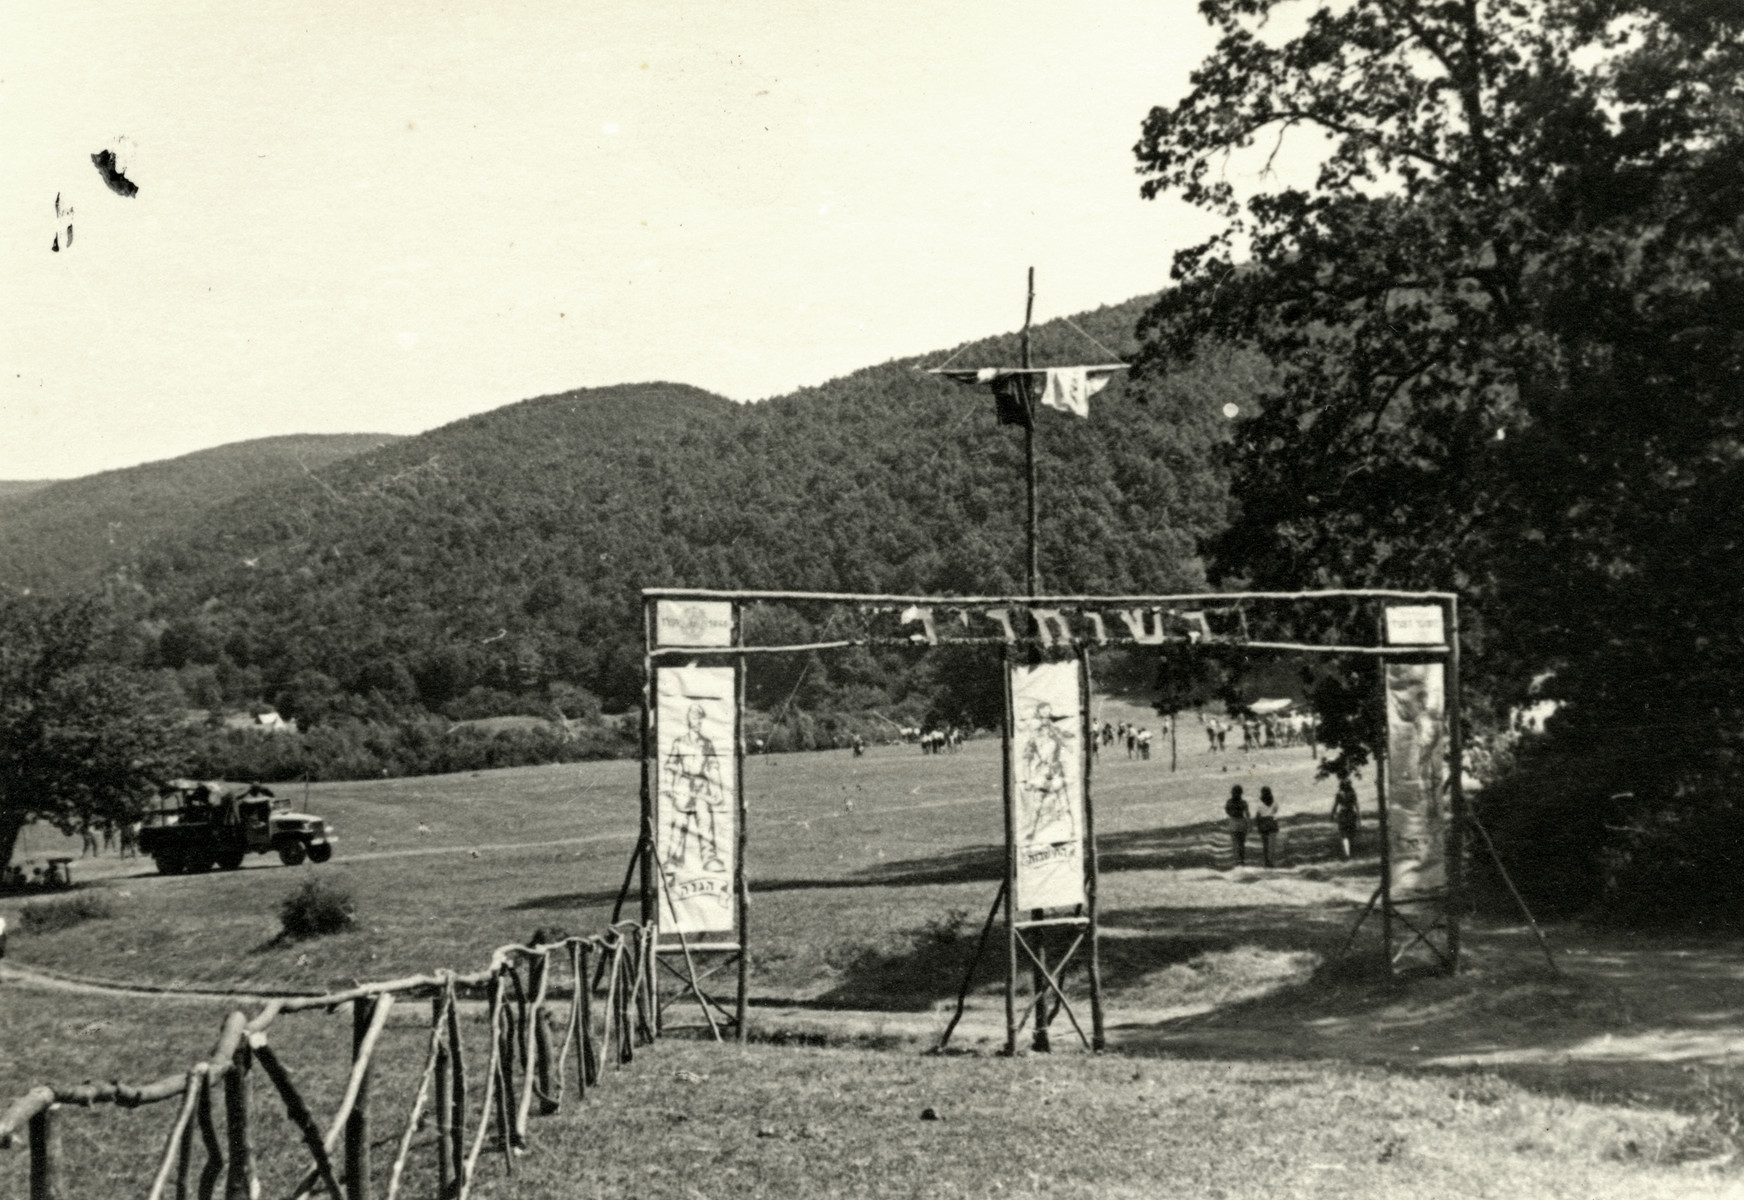 View of the entrance to Shomria, the Shomer Hatzair camp in postwar Hungary.